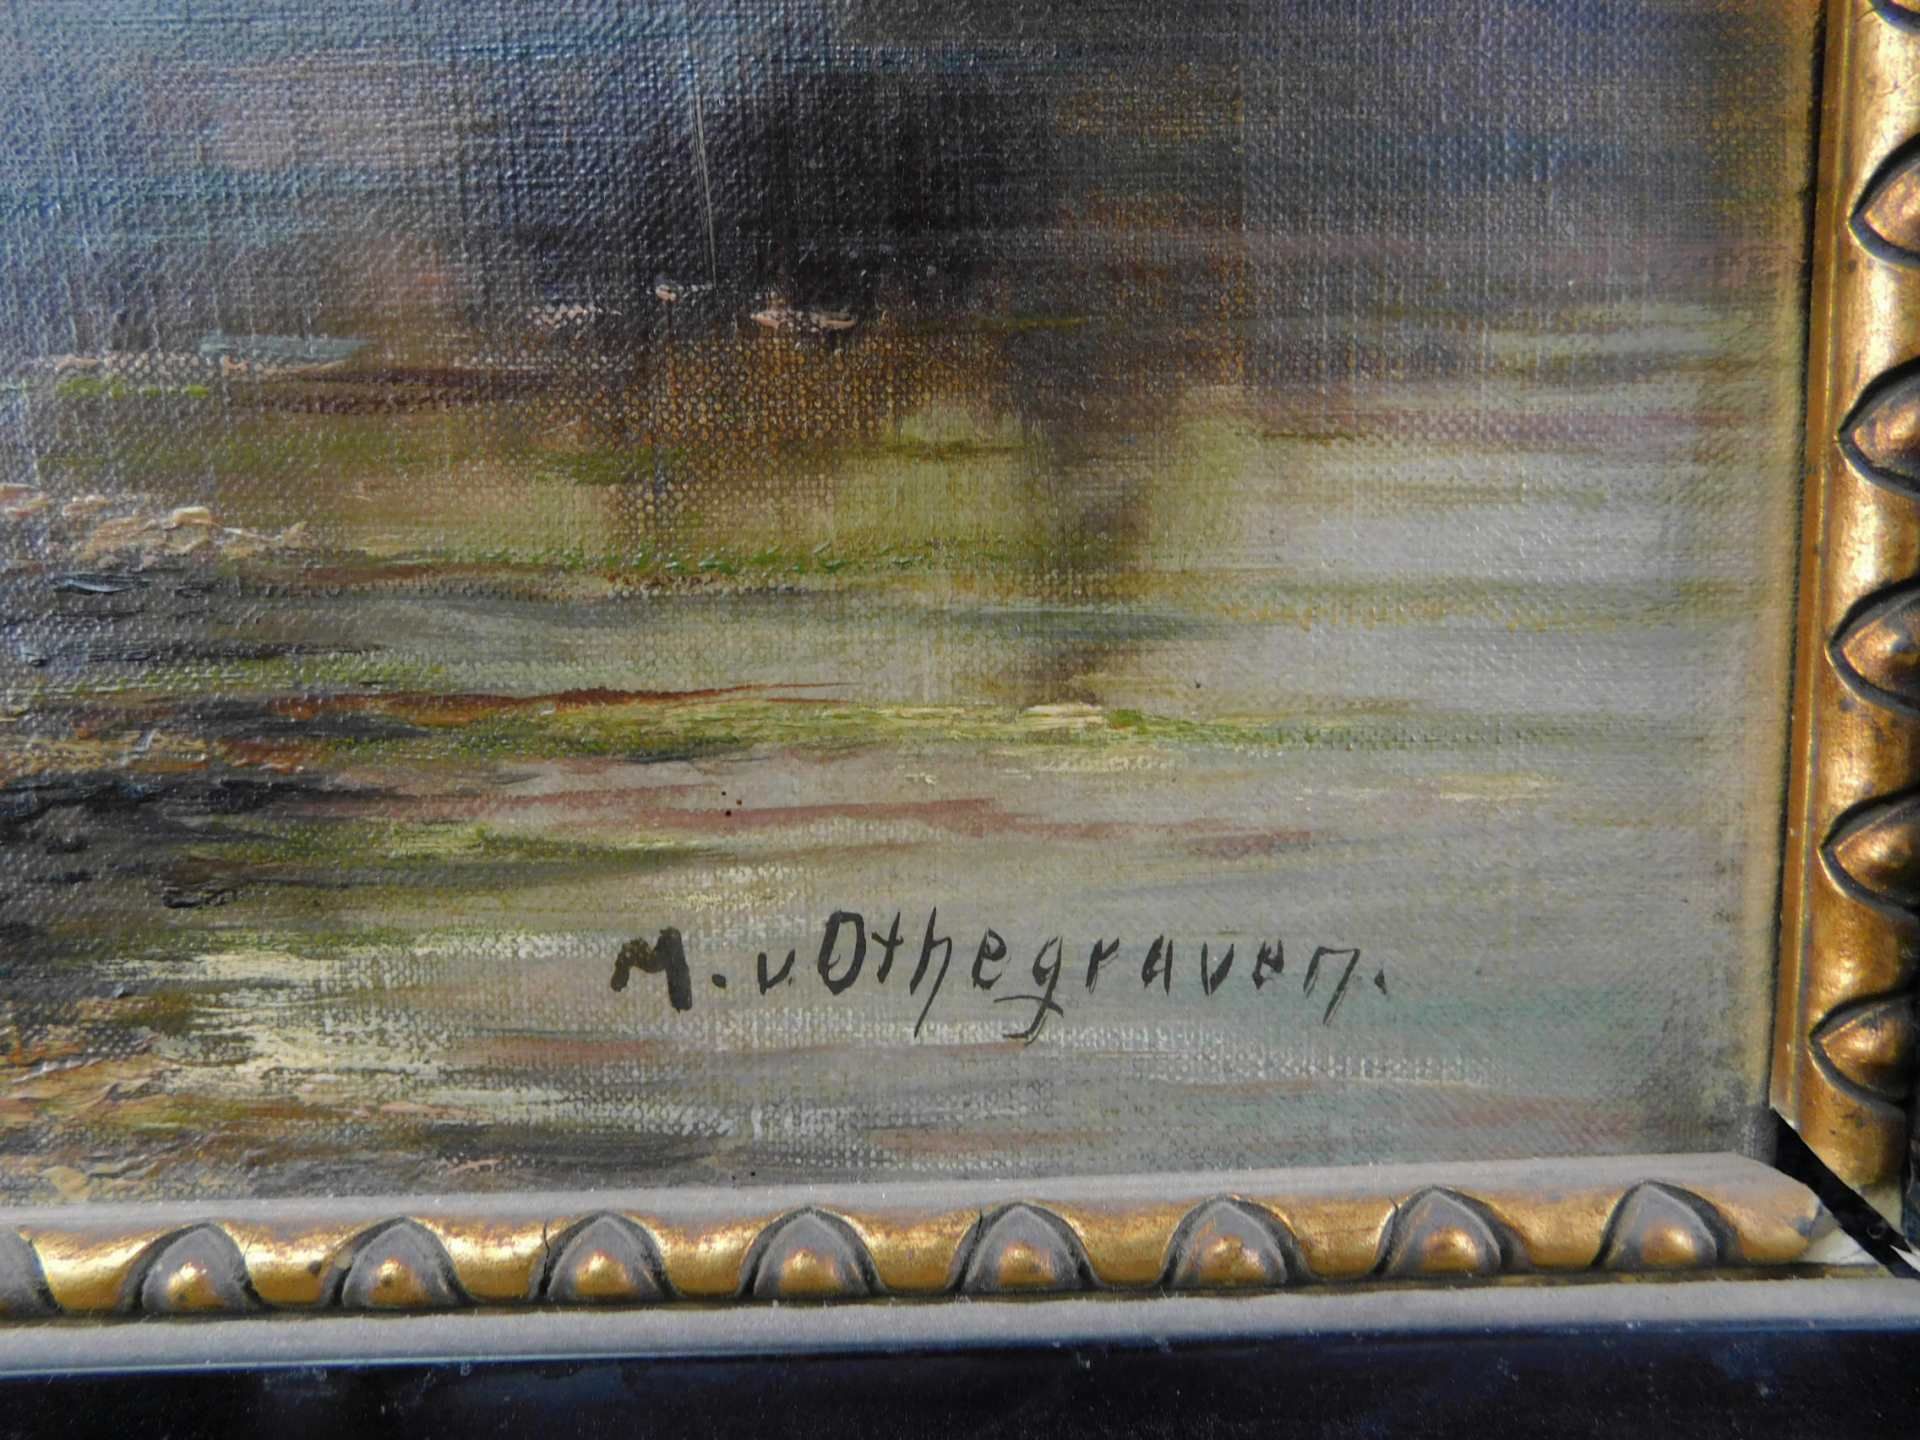 Moses v. Othegraven, 19./20.Jhdt., Worpsweder Landschaft, Öl auf Leinwand, sig. unten rechts, m - Image 4 of 5